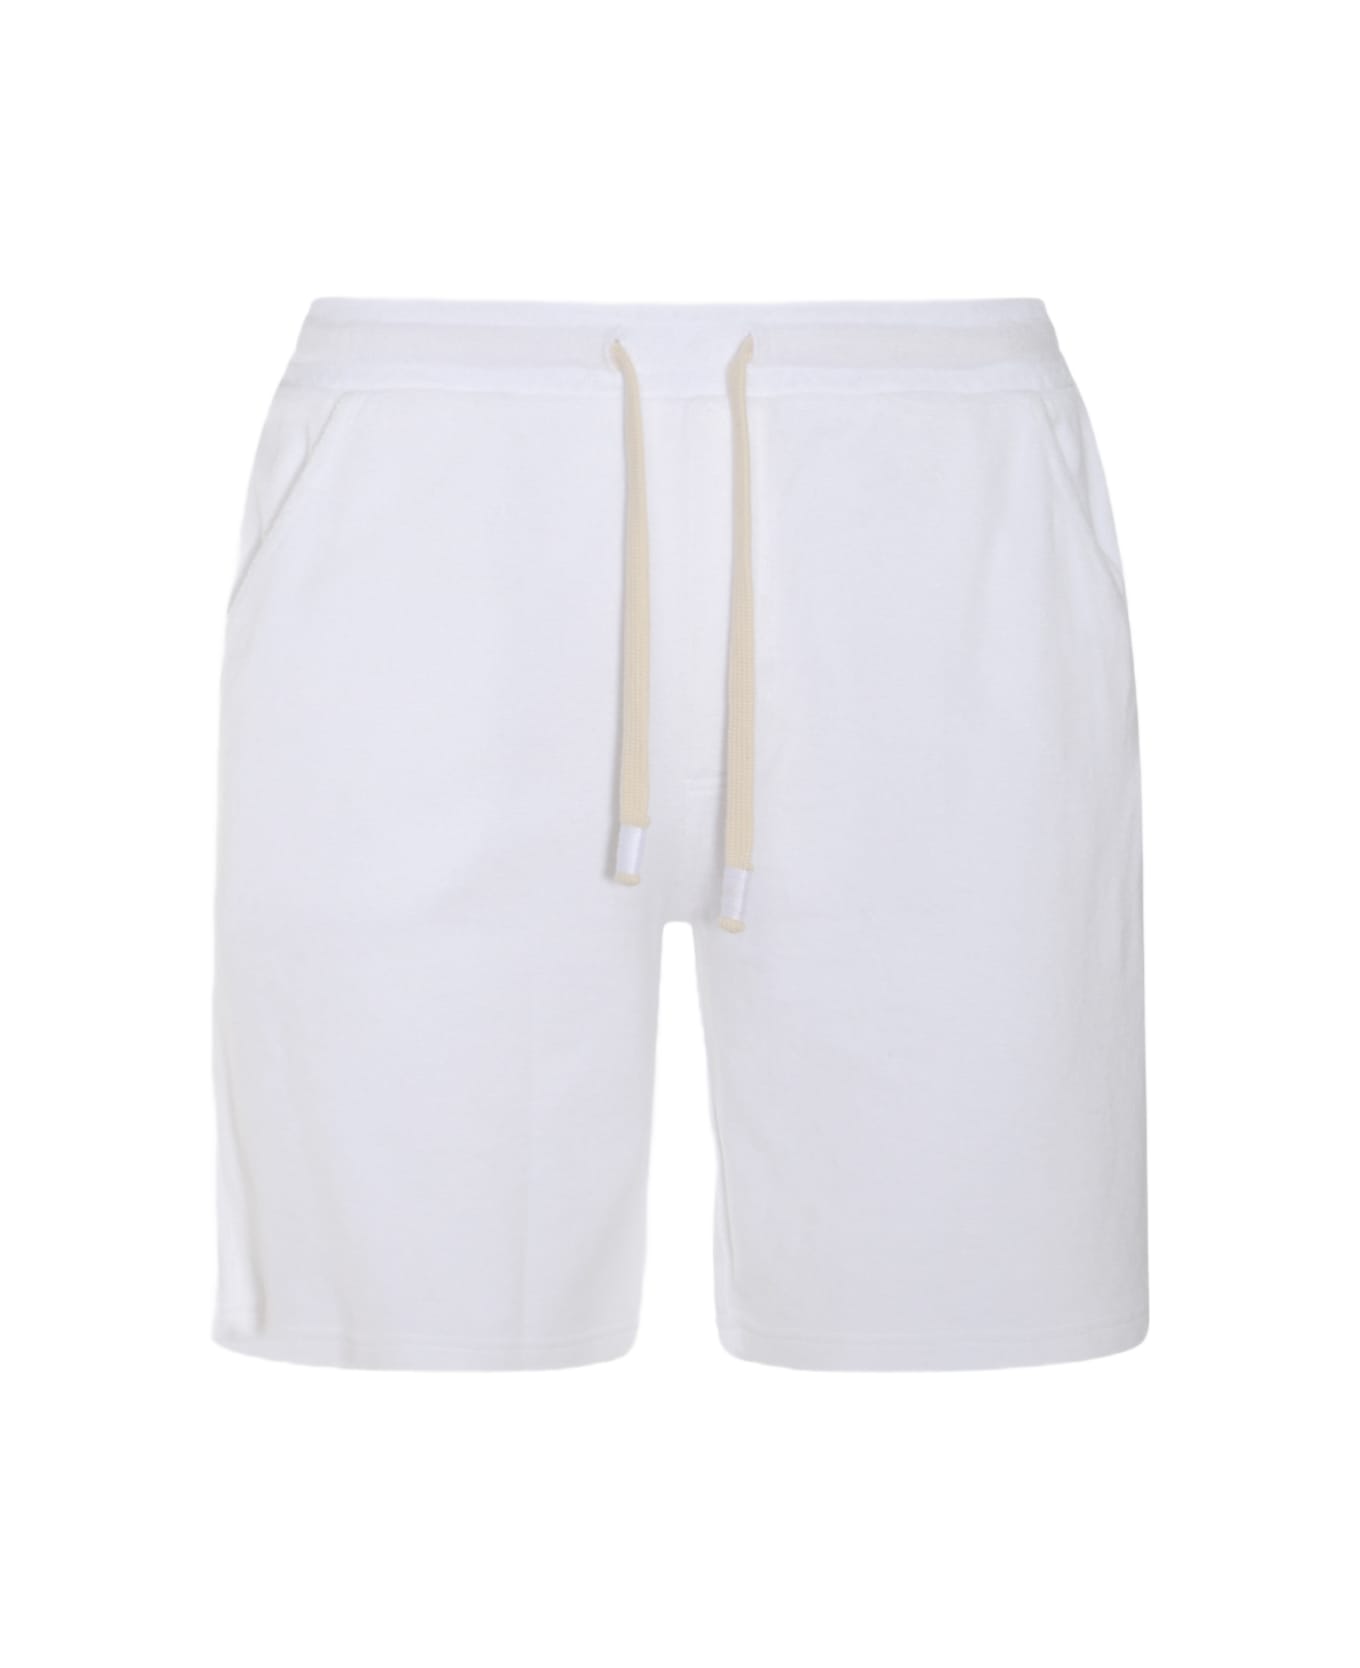 Altea White Cotton Shorts - White